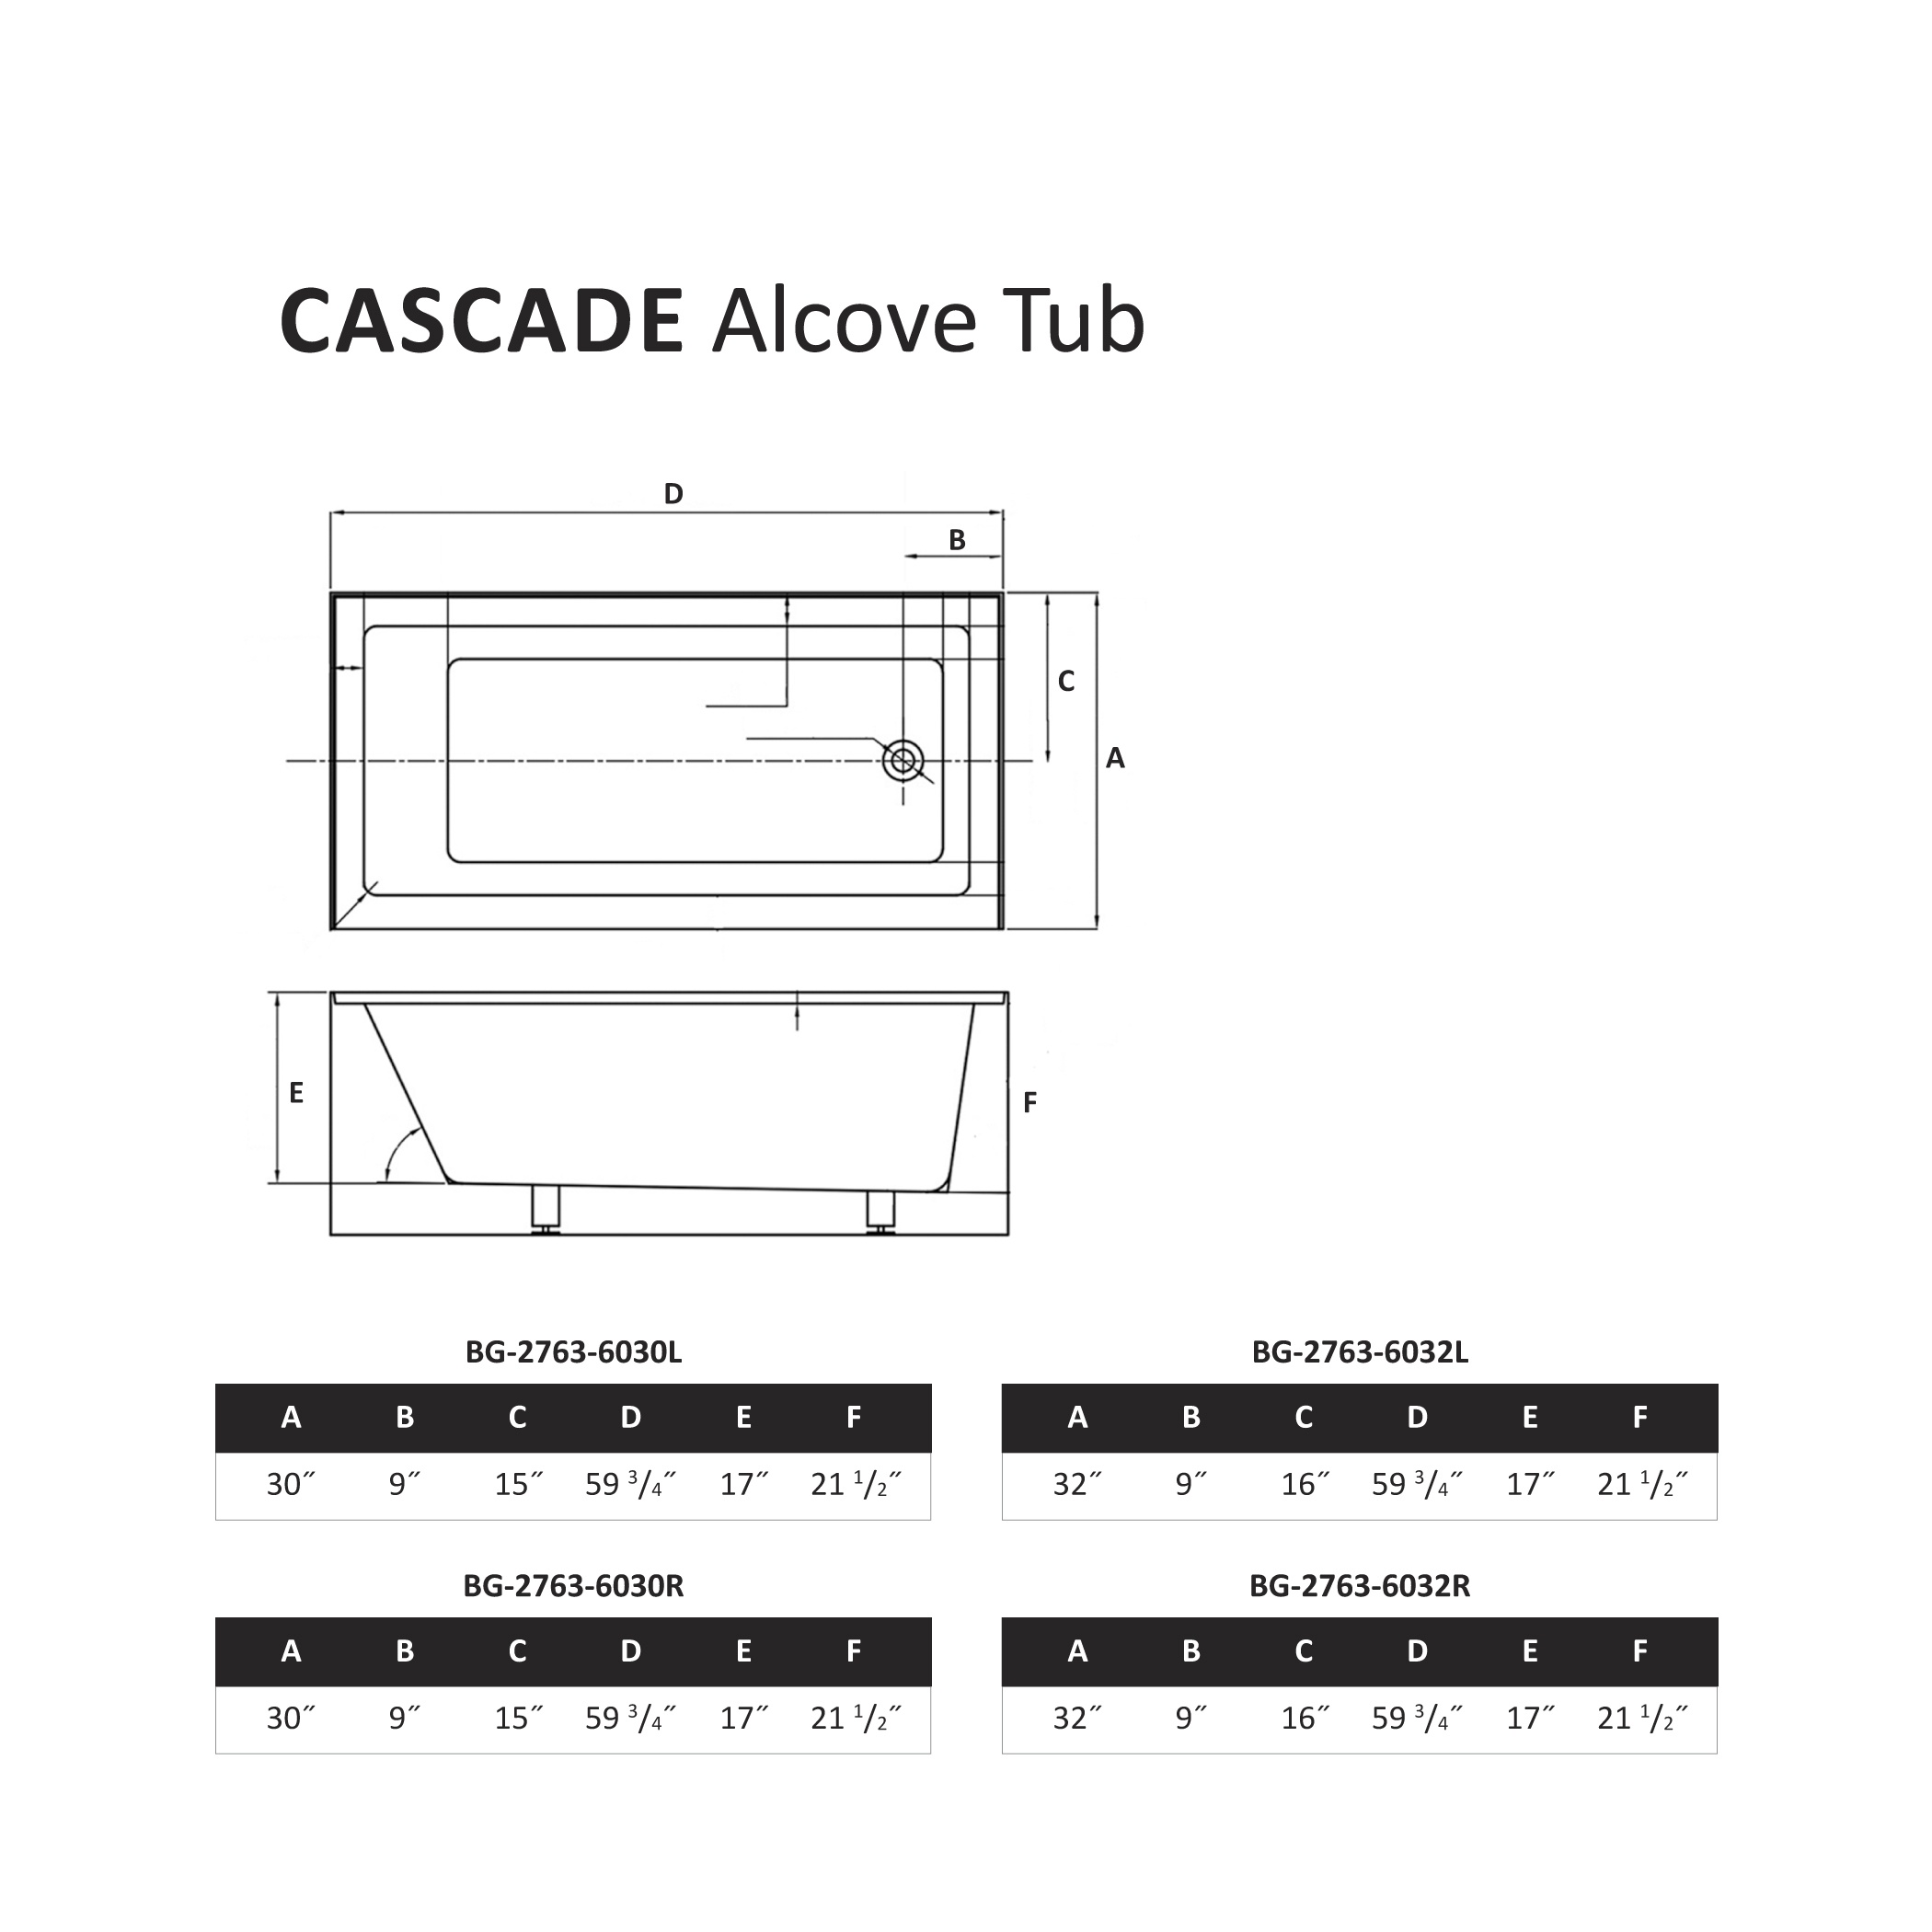 Cascade Alcove Tub Specification